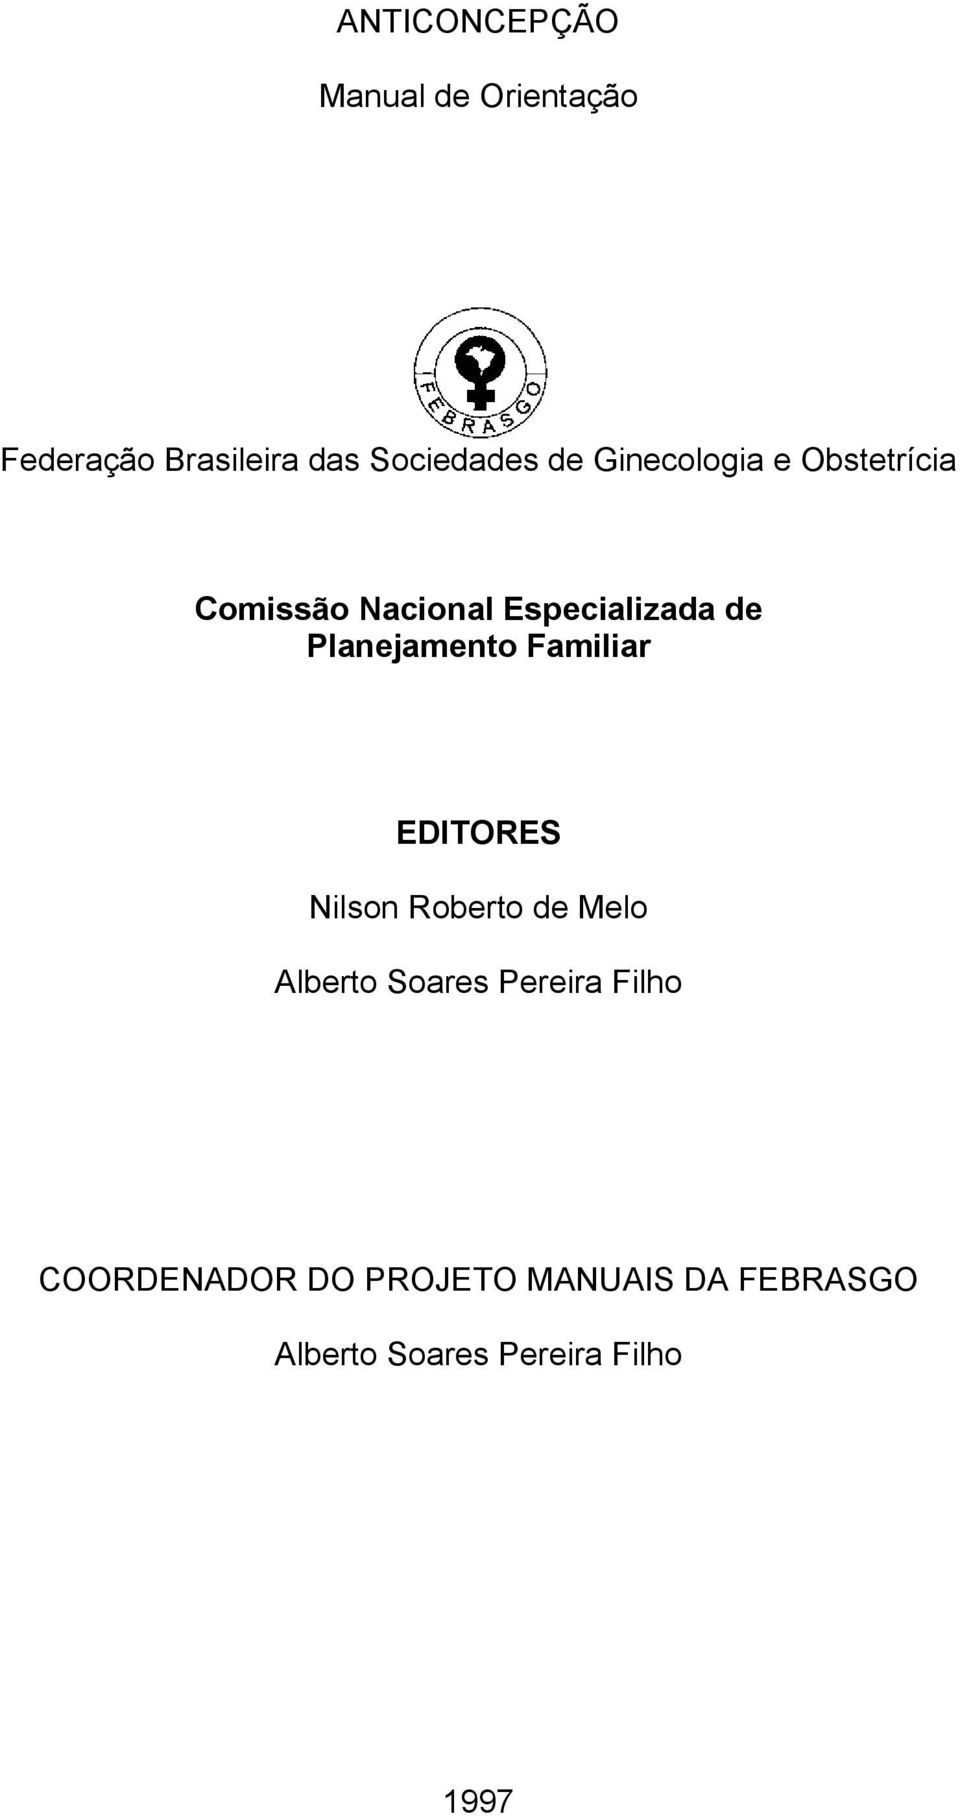 Familiar EDITORES Nilson Roberto de Melo Alberto Soares Pereira Filho